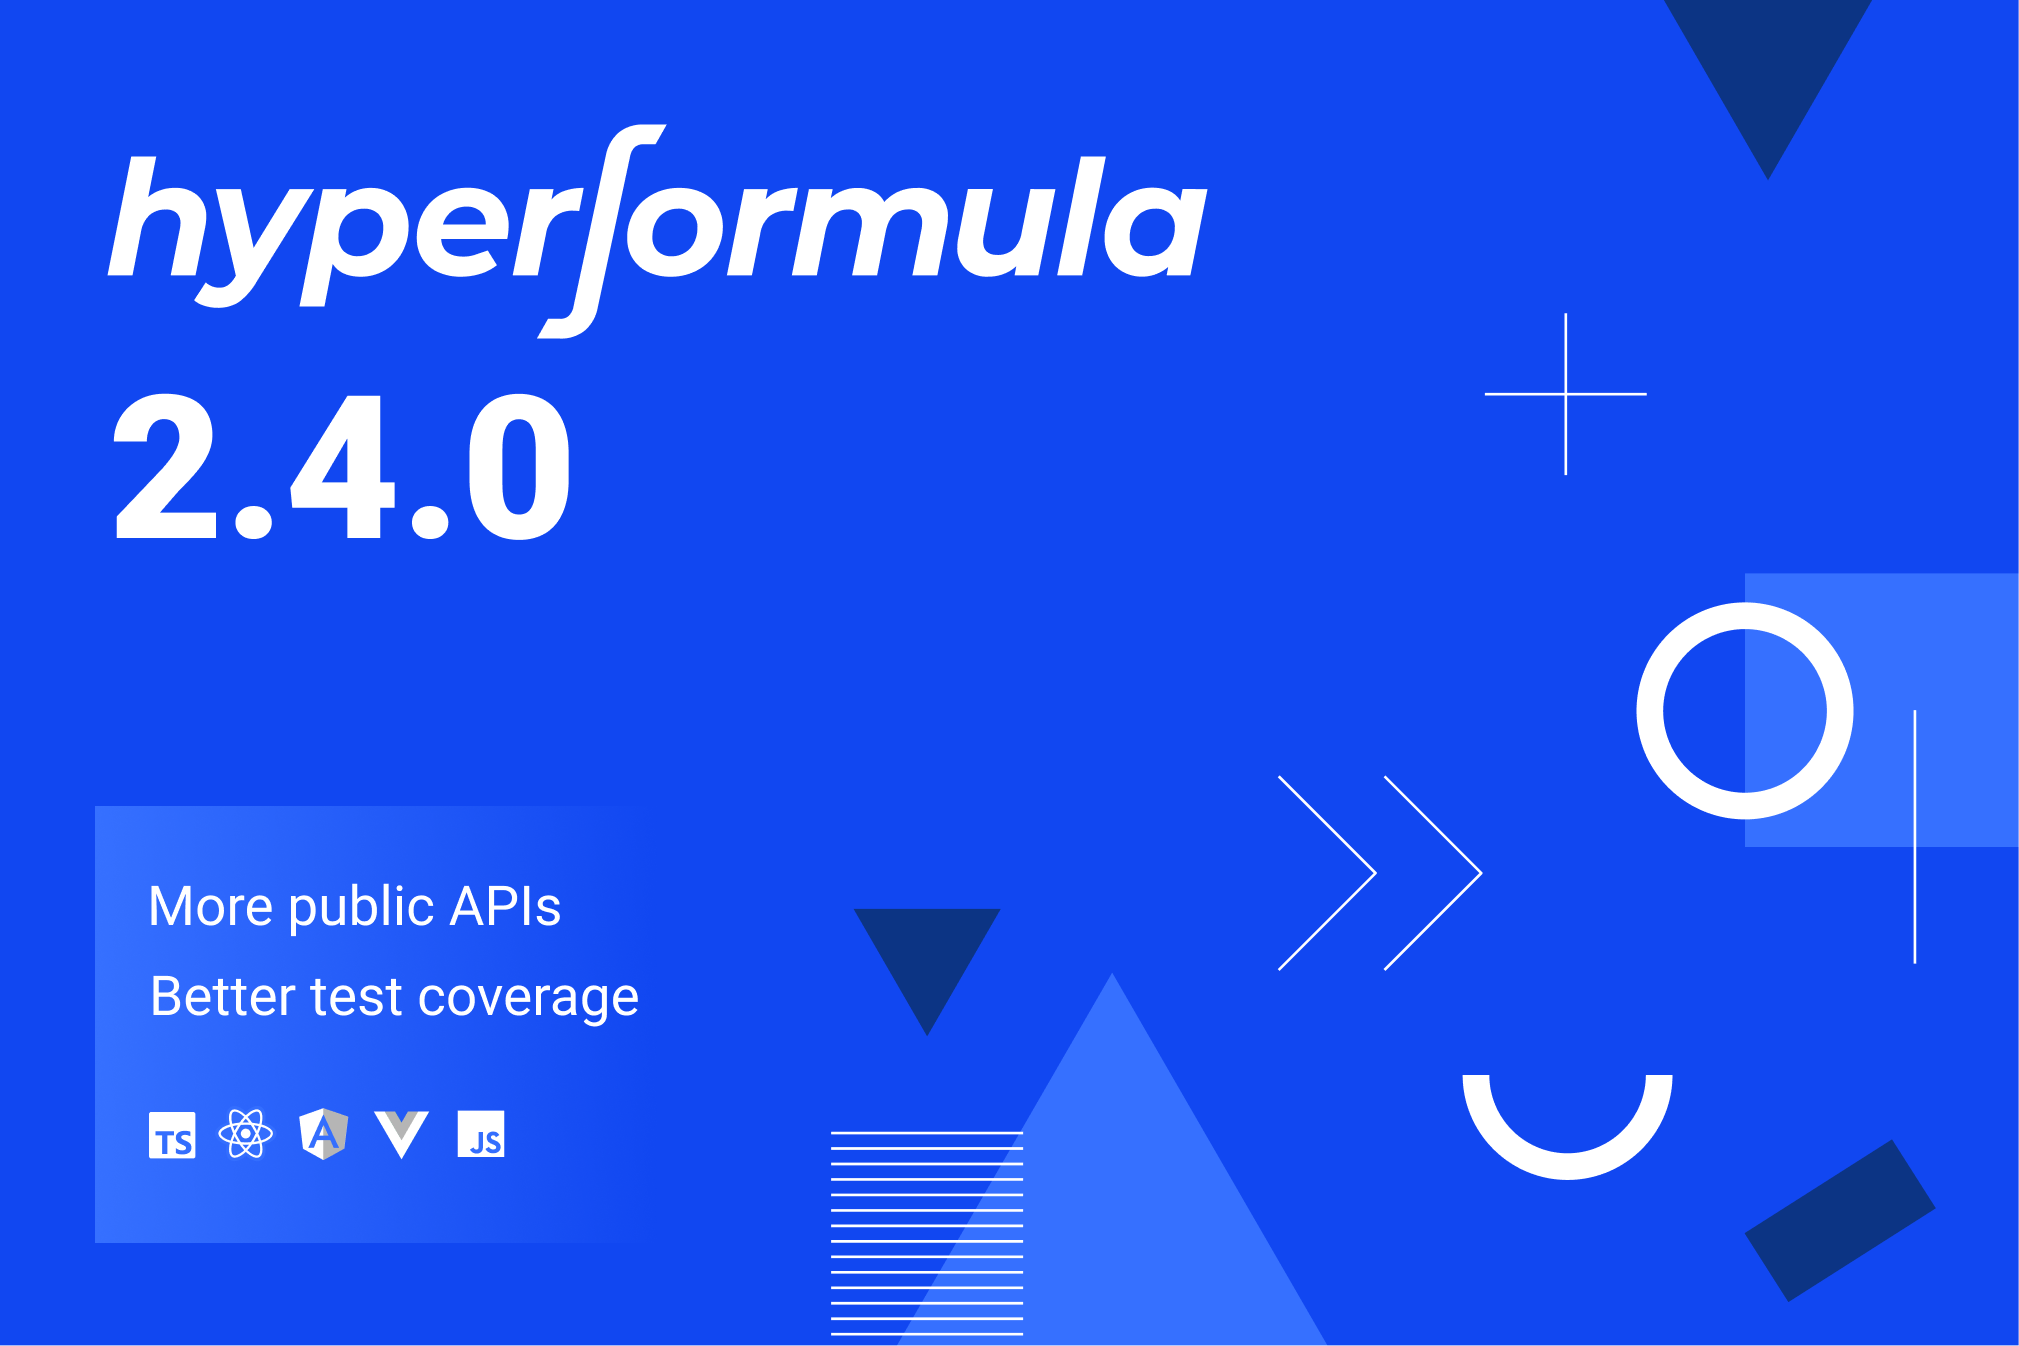 Illustration for a blog post - HyperFormula 2.4.0: More public APIs and better test coverage